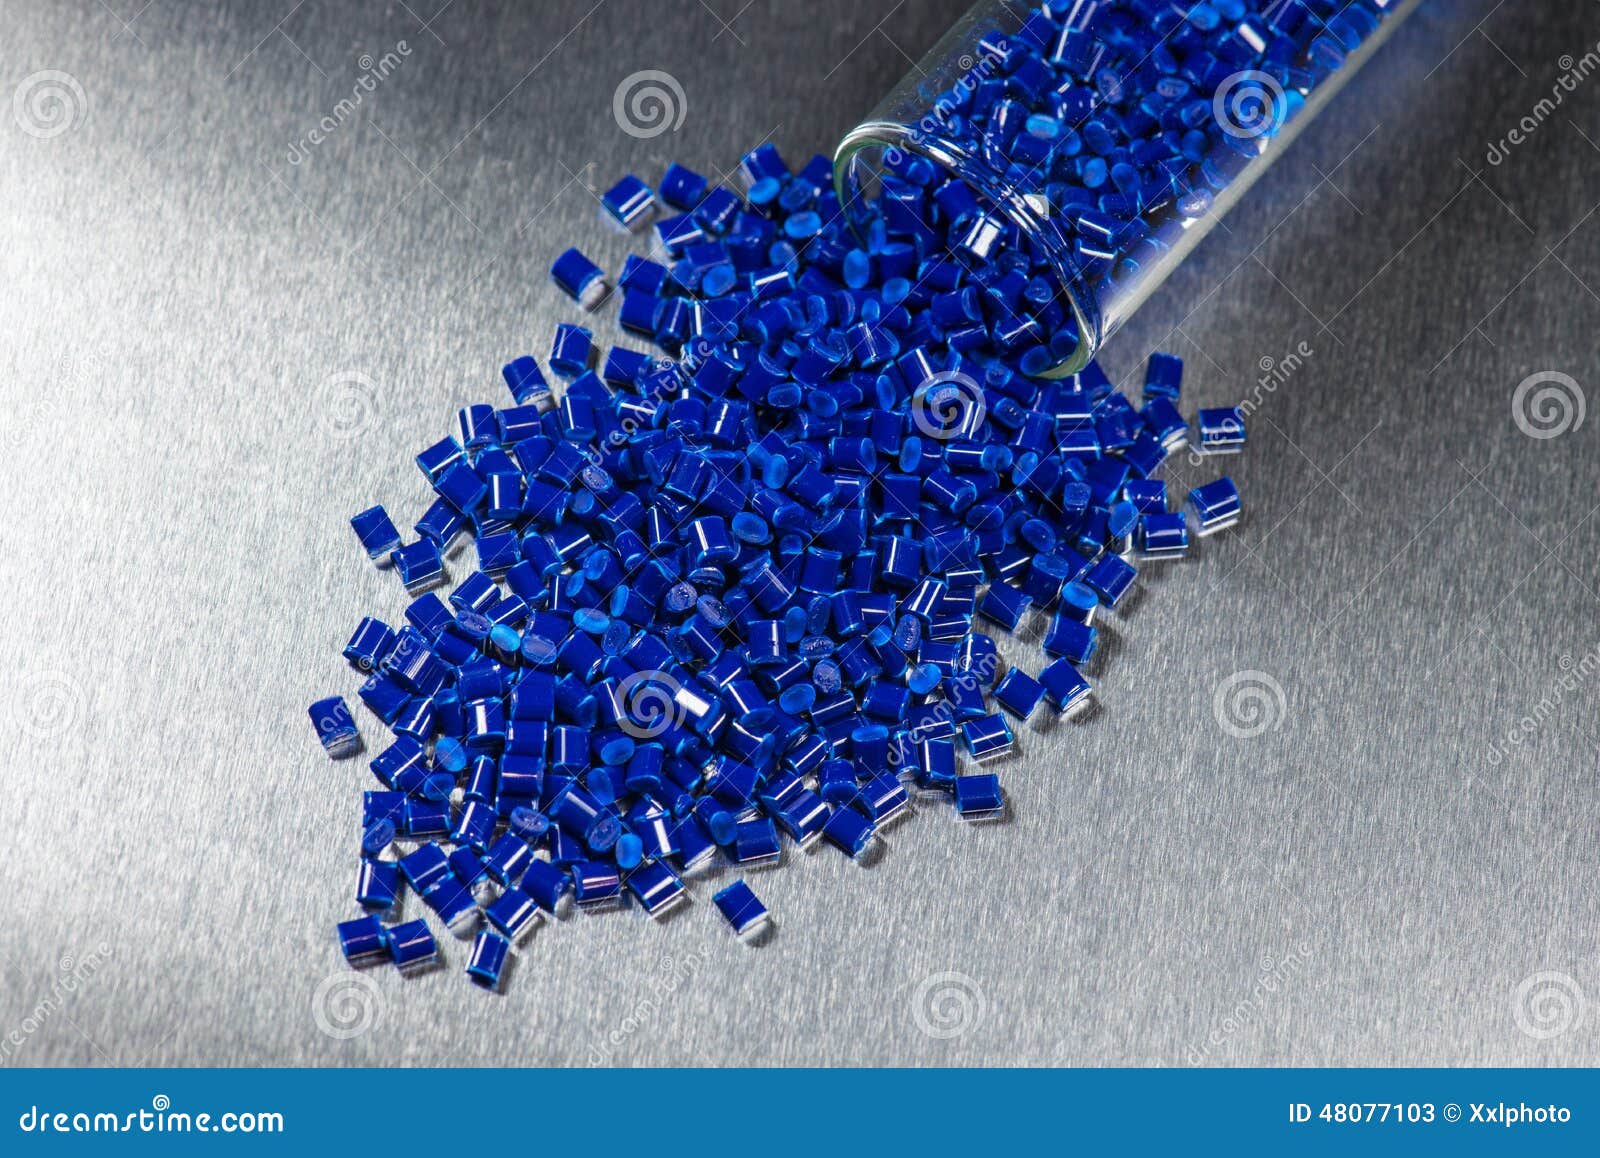 blue polymer granules in test glass